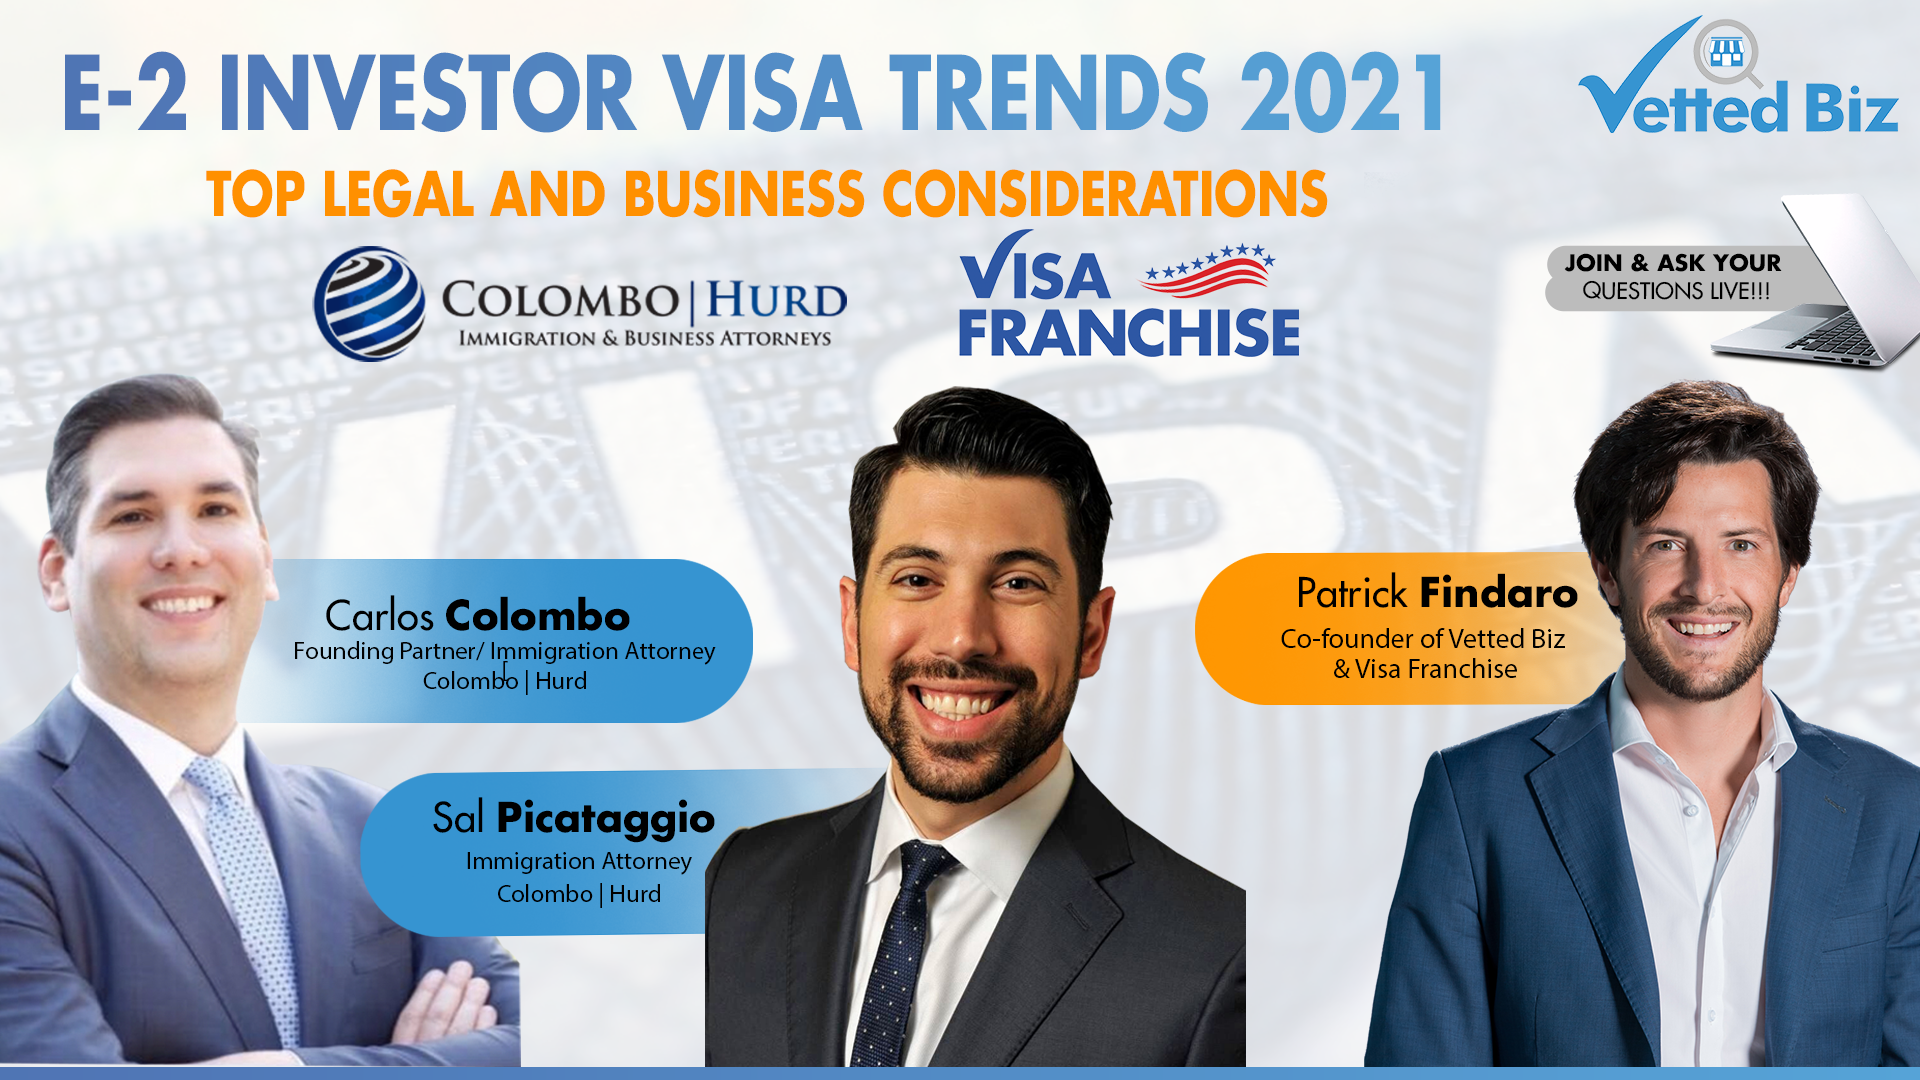 E-2 Investor Visa Trends 2021 ENG